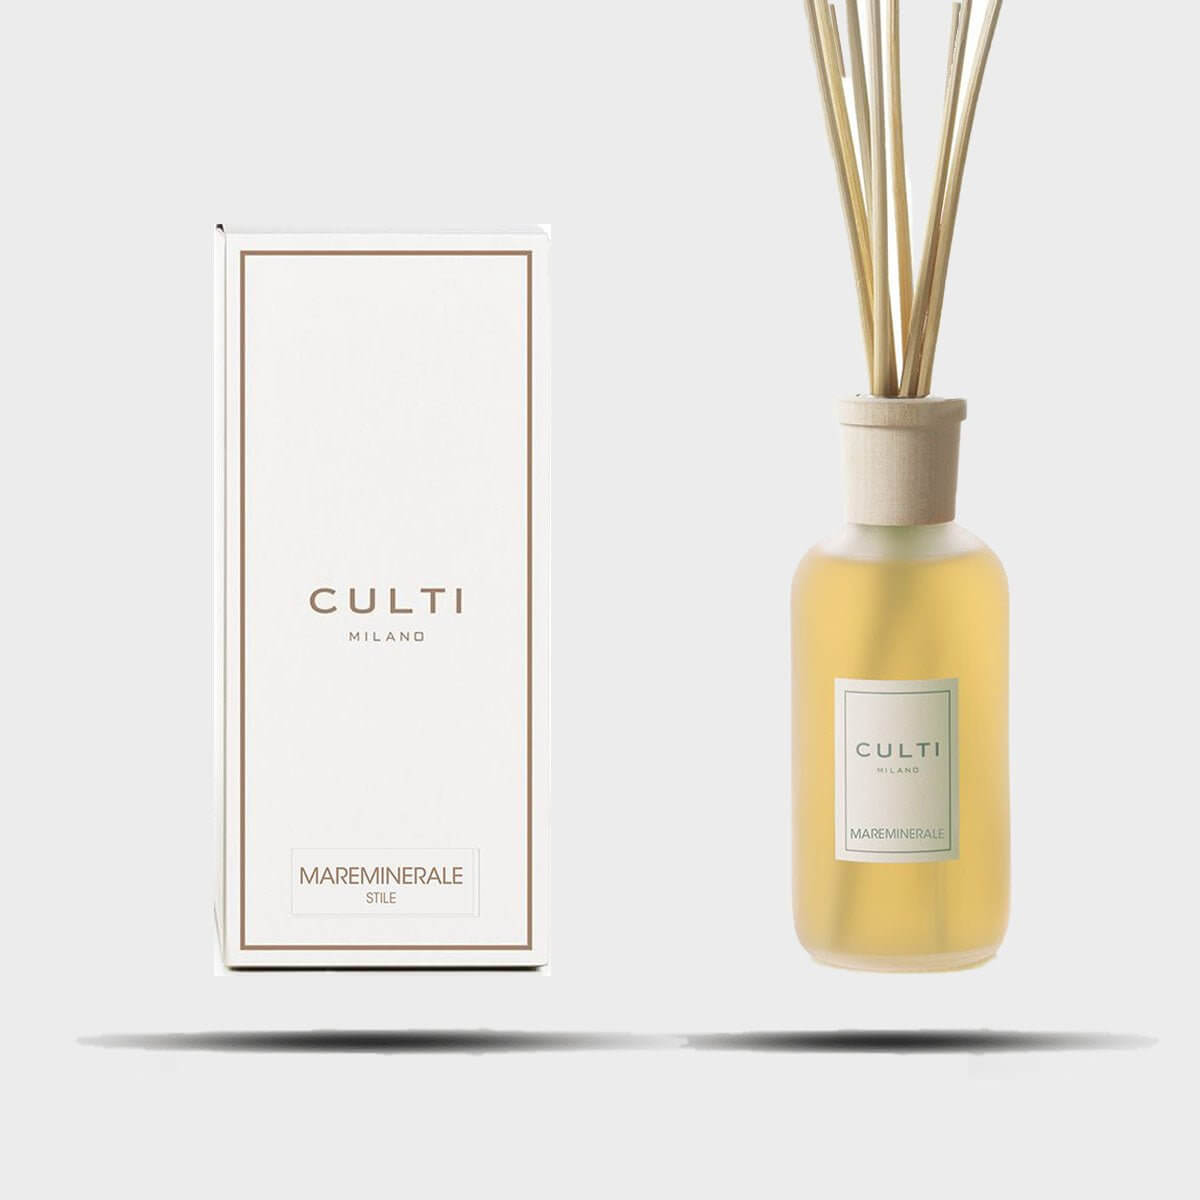 Diffuser Stile Mareminerale Home Fragrances by Culti Milano,Size